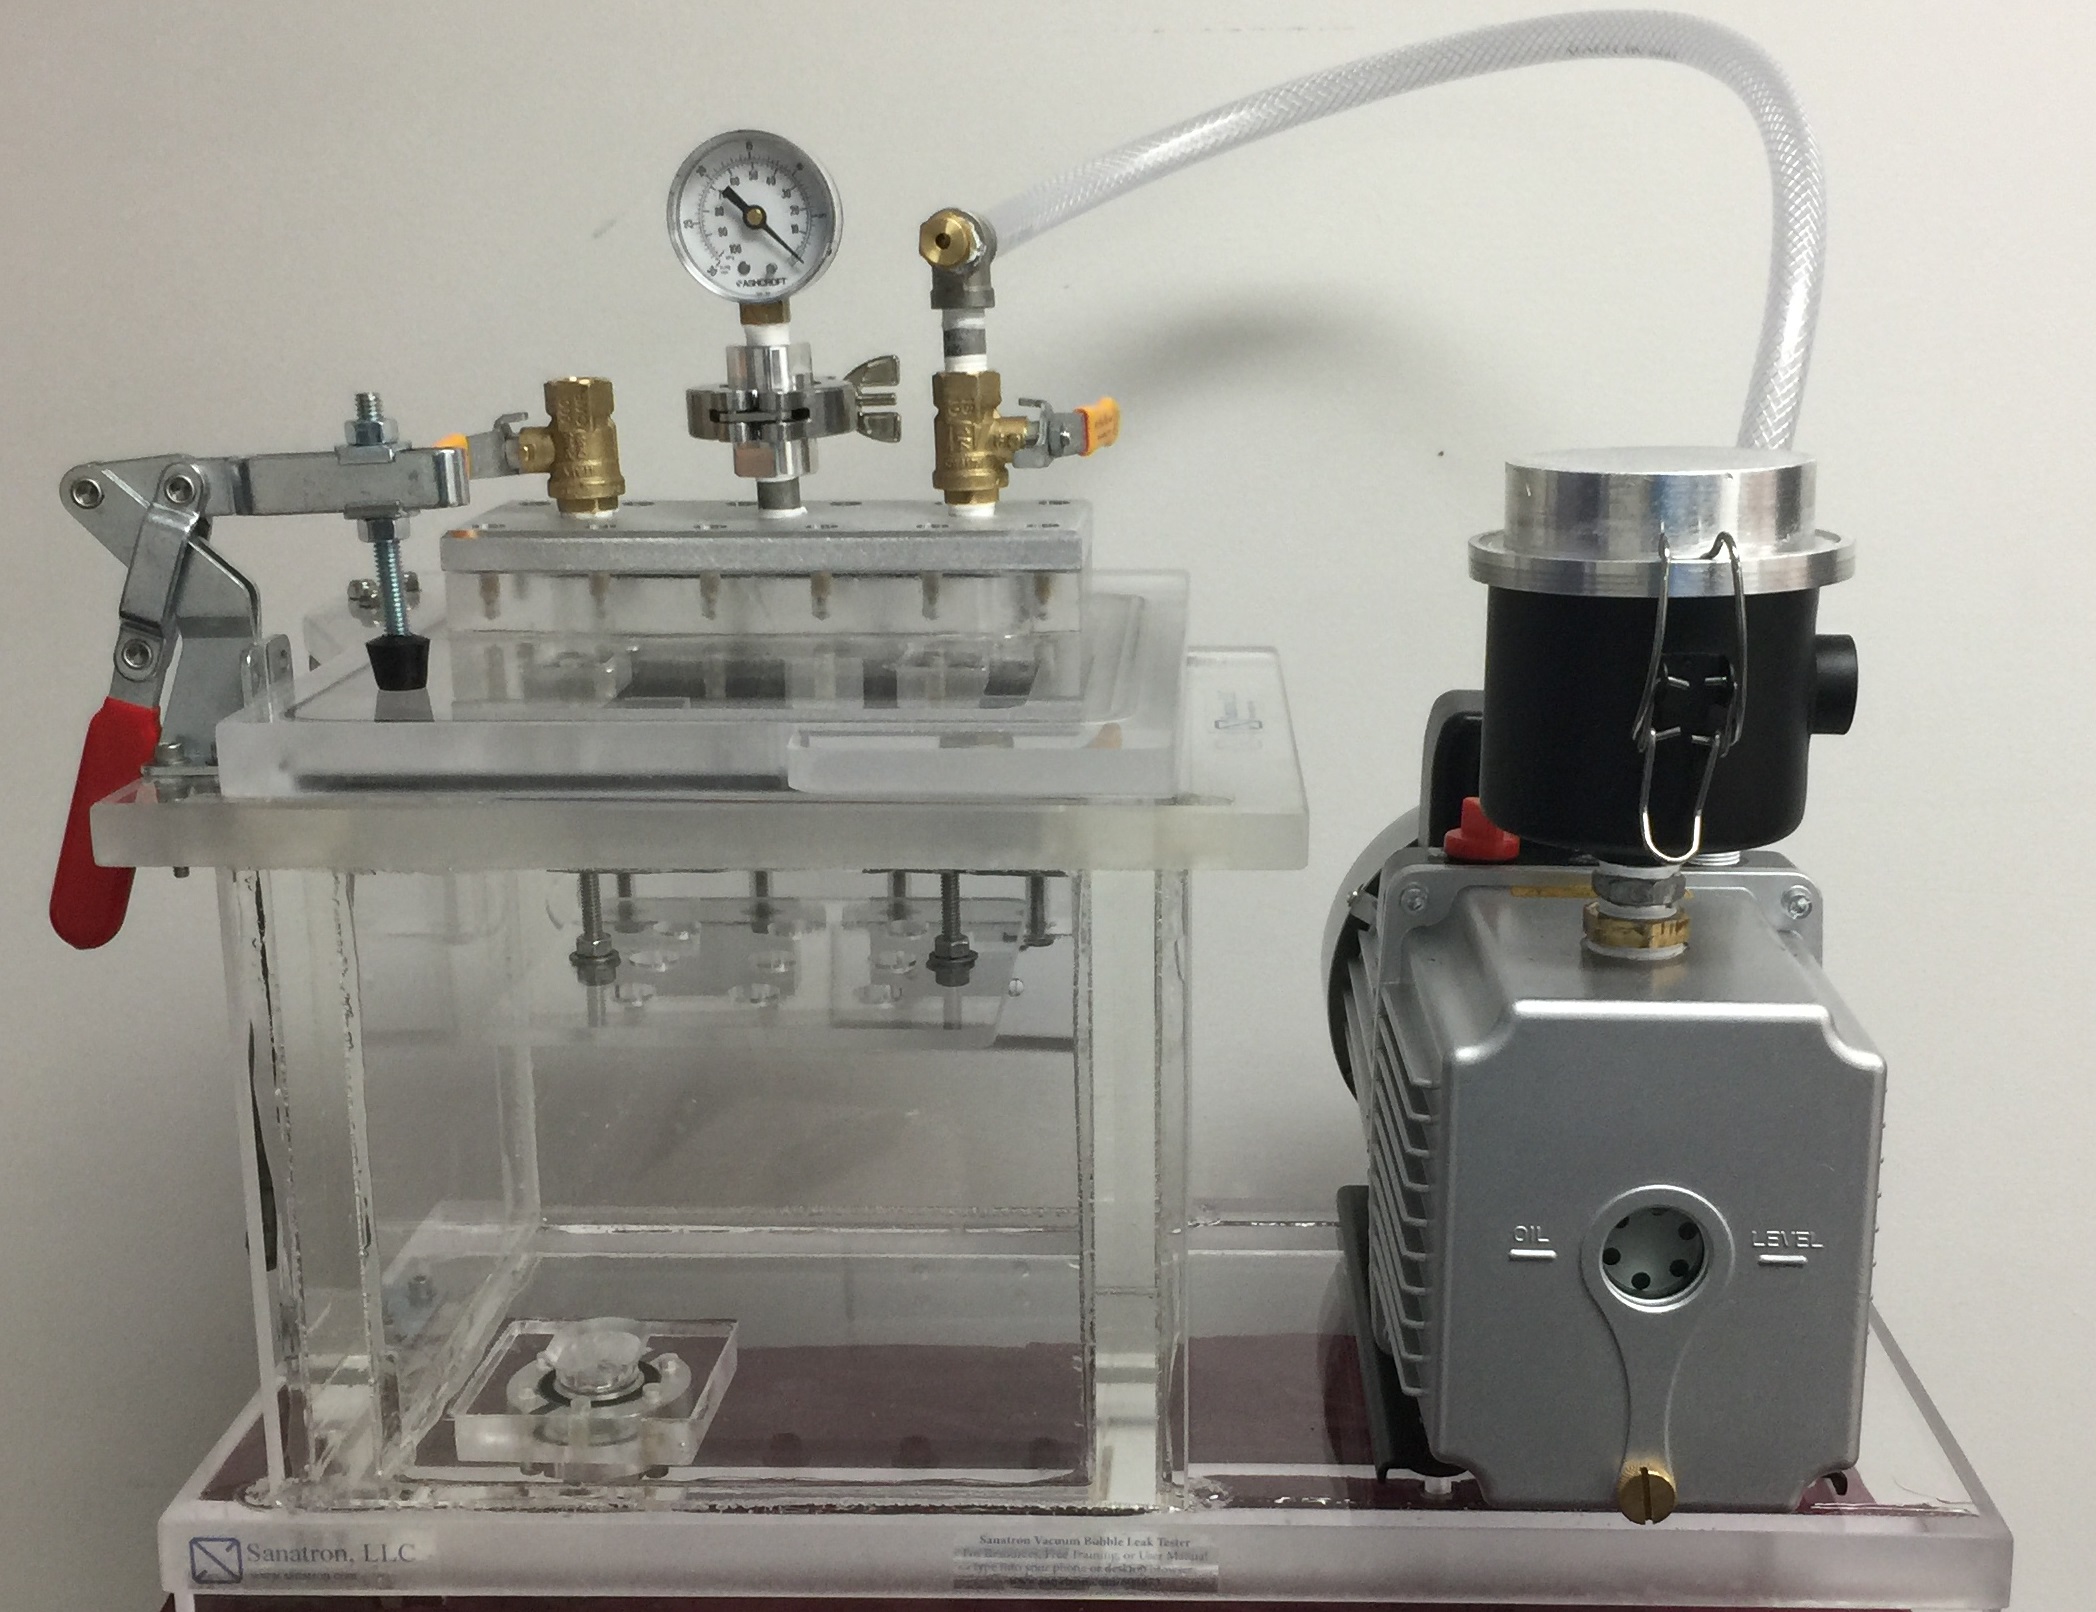 Hand Operated Vacuum Pump for Leak Testing ROVs and Enclosures